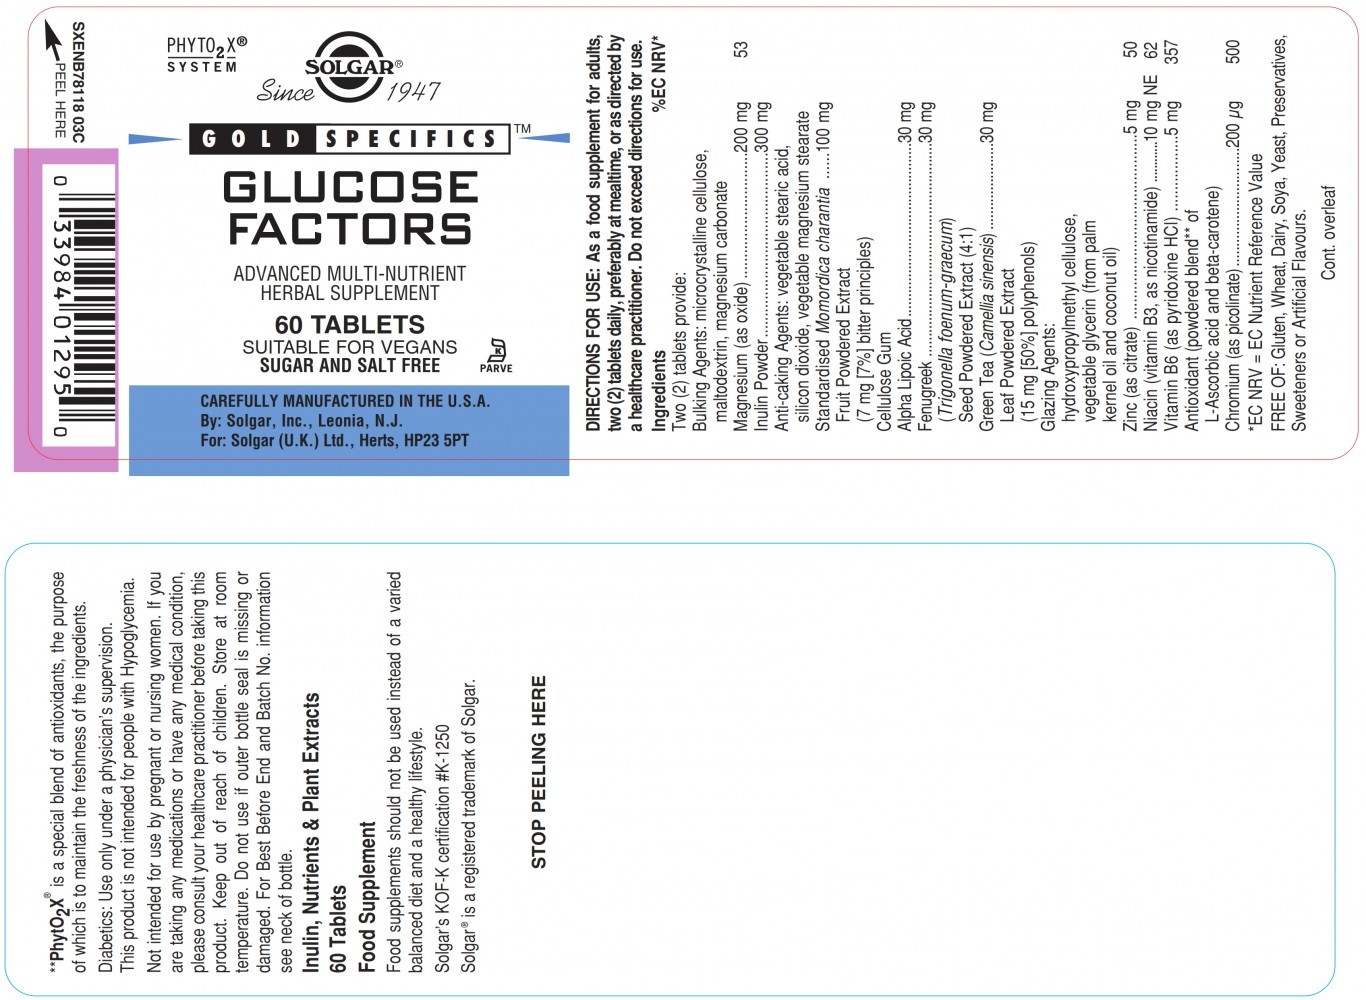 Solgar Gold Specifics™ Glucose Factors